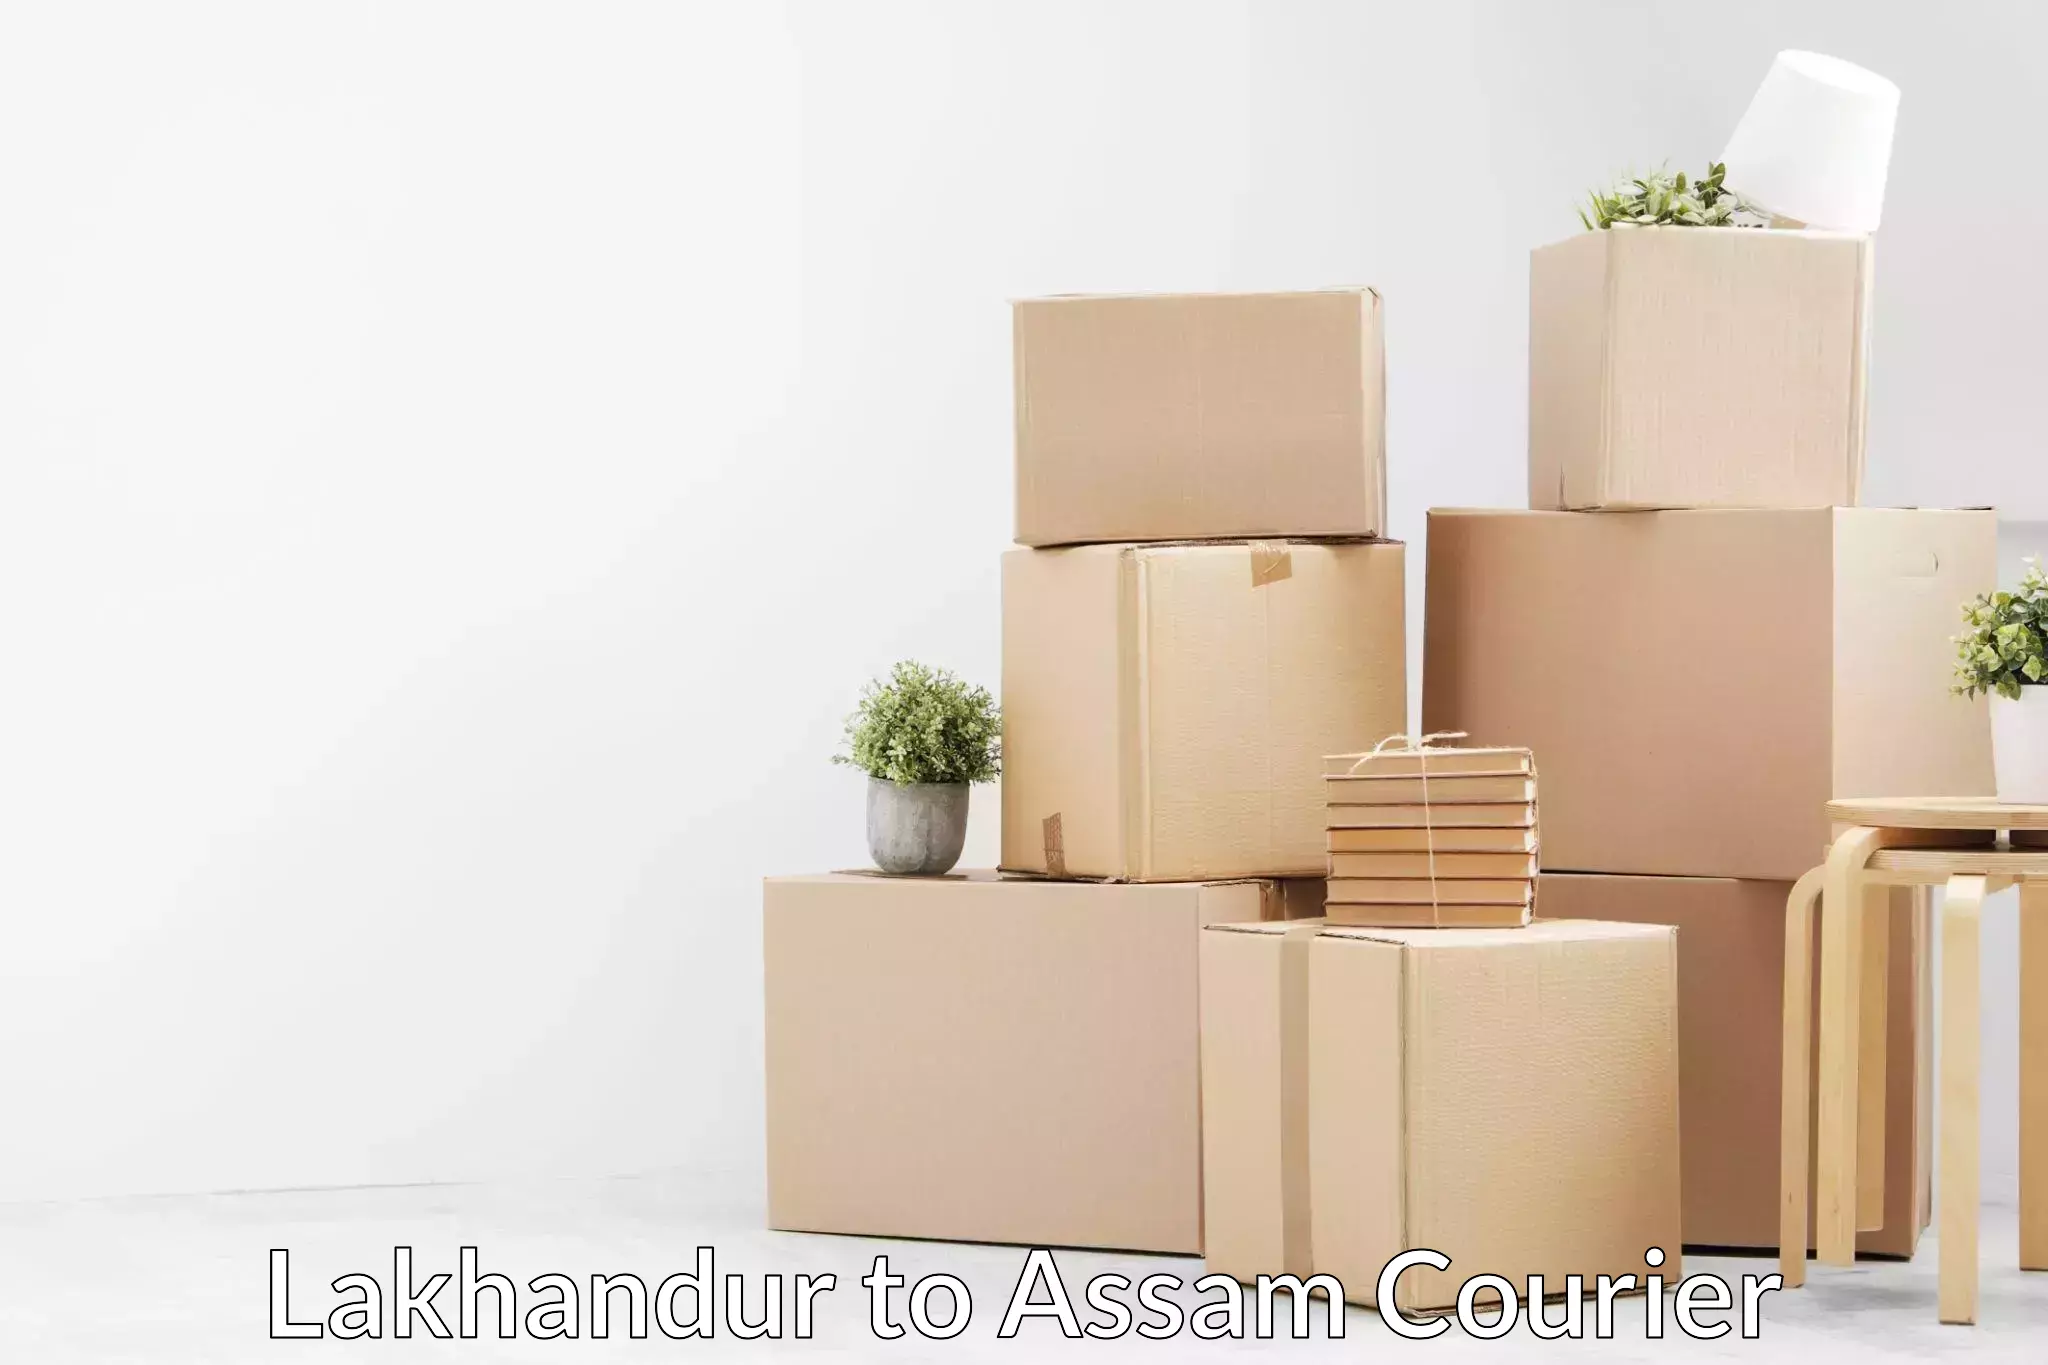 Moving and packing experts Lakhandur to Darranga Mela